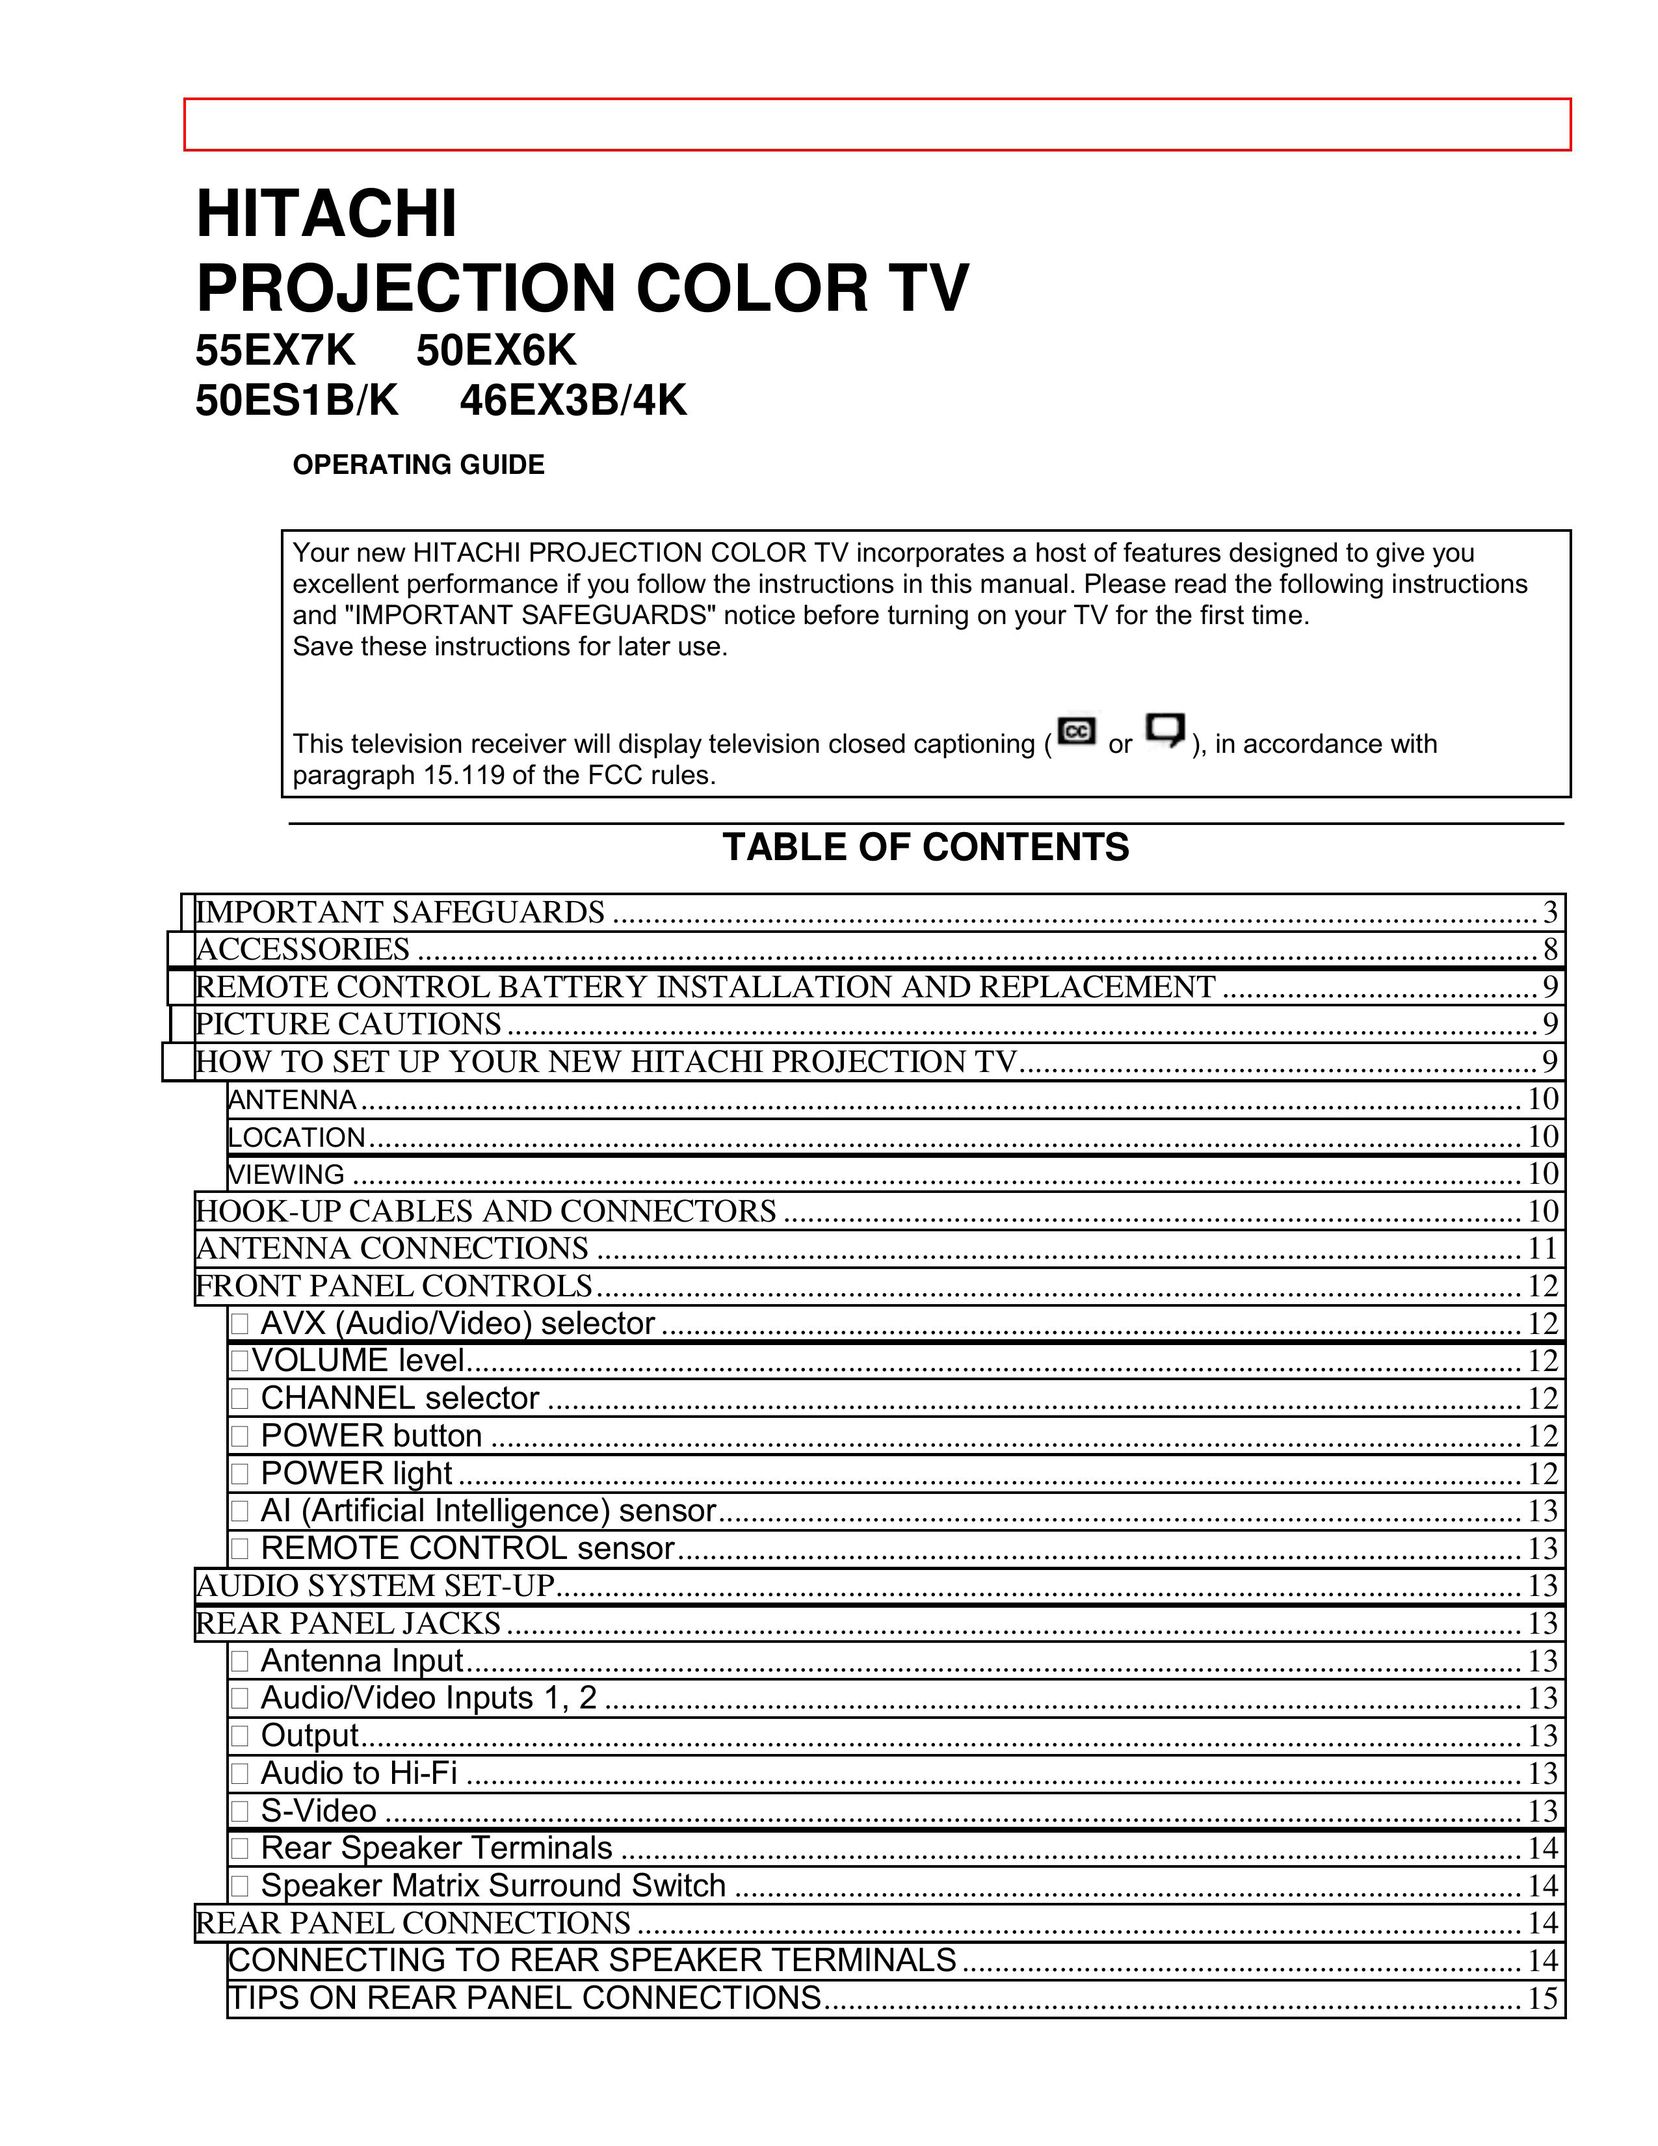 Hitachi 50ES1B Projection Television User Manual